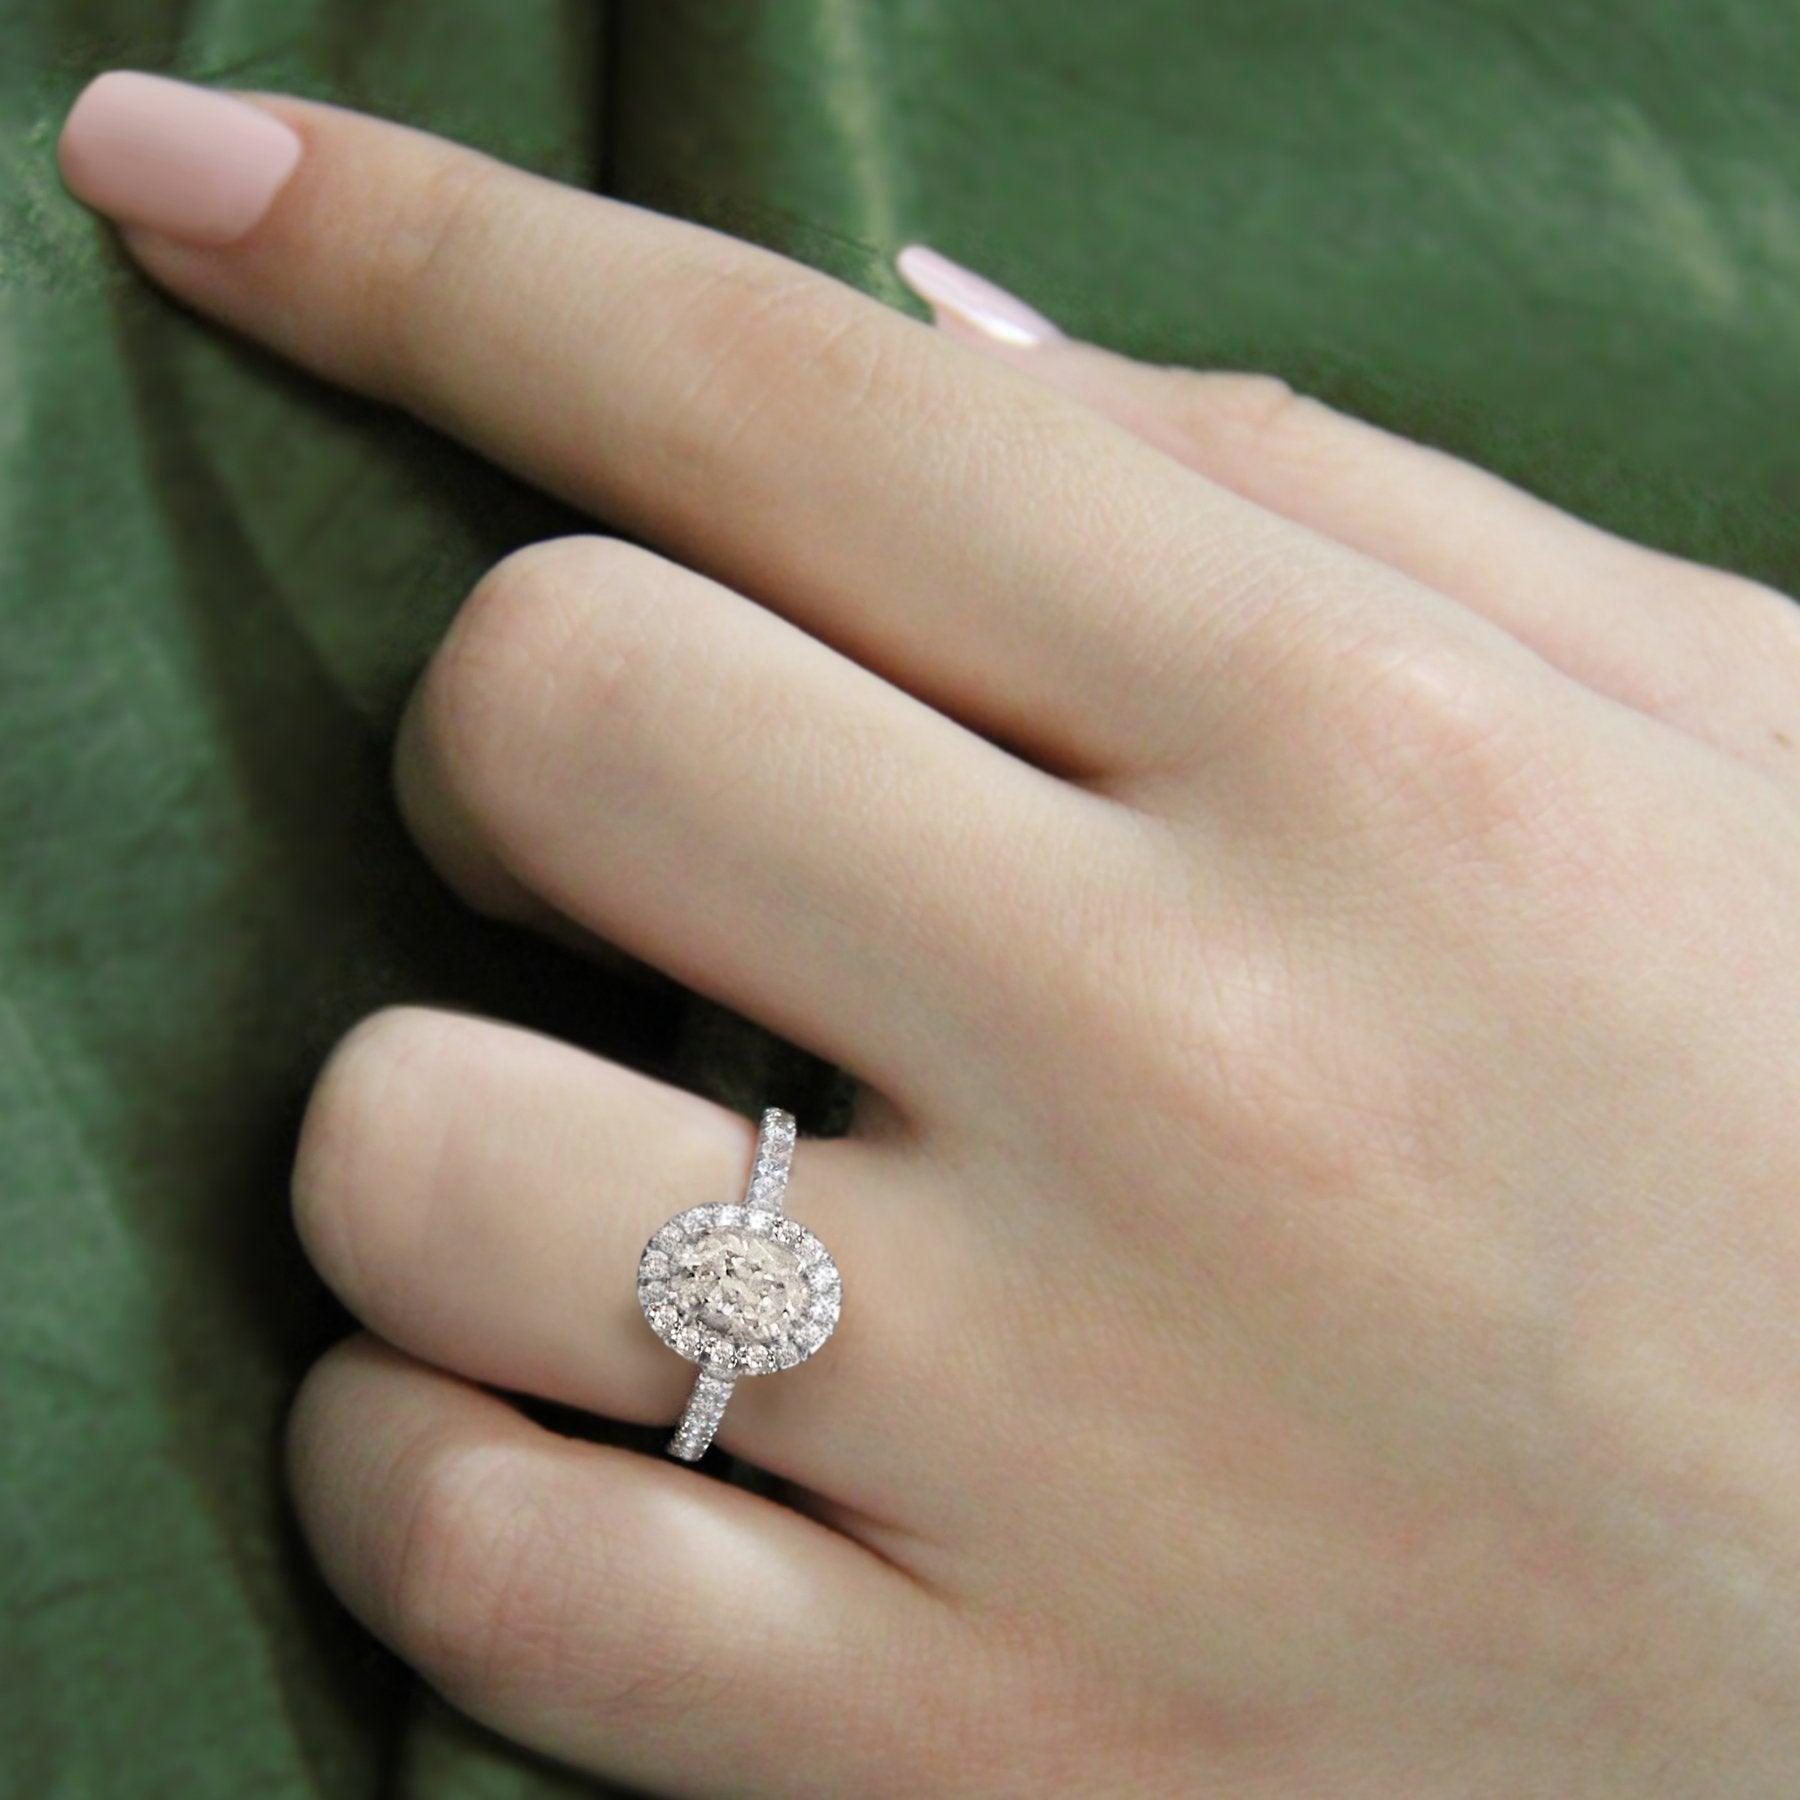 BW JAMES Engagement Rings "The Aurora" Halo Semi-Mount Diamond Ring